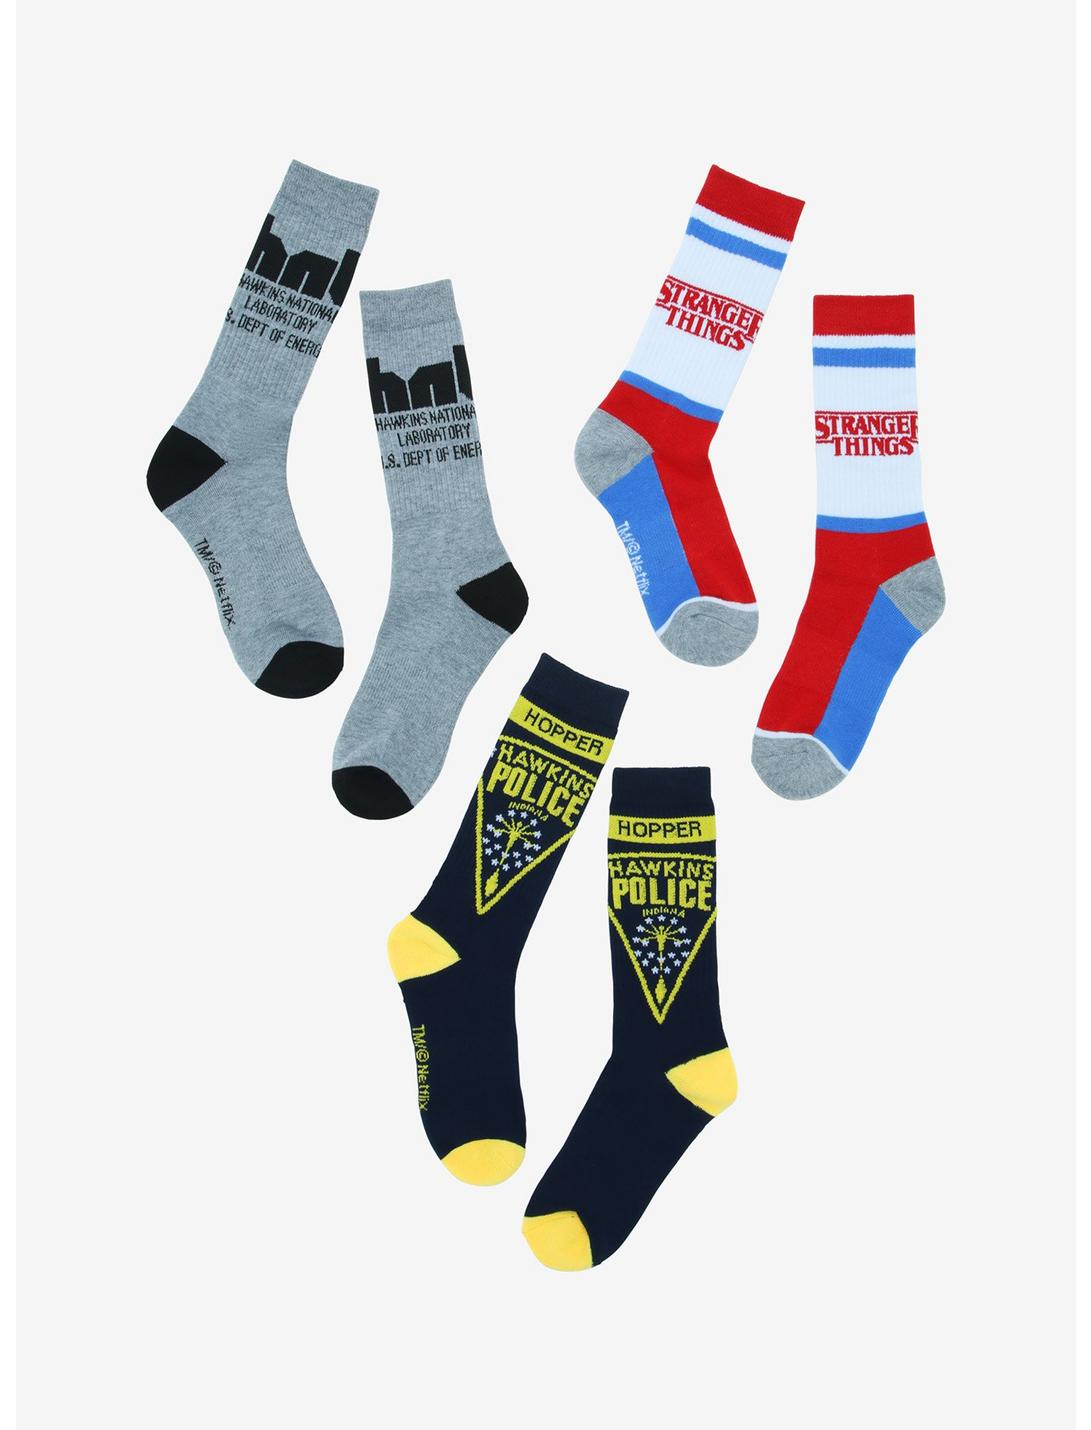 LIMITED EDITION Custom Elite Dri-Fit Style Socks BEAST MODE LOGO Sport Socks! 